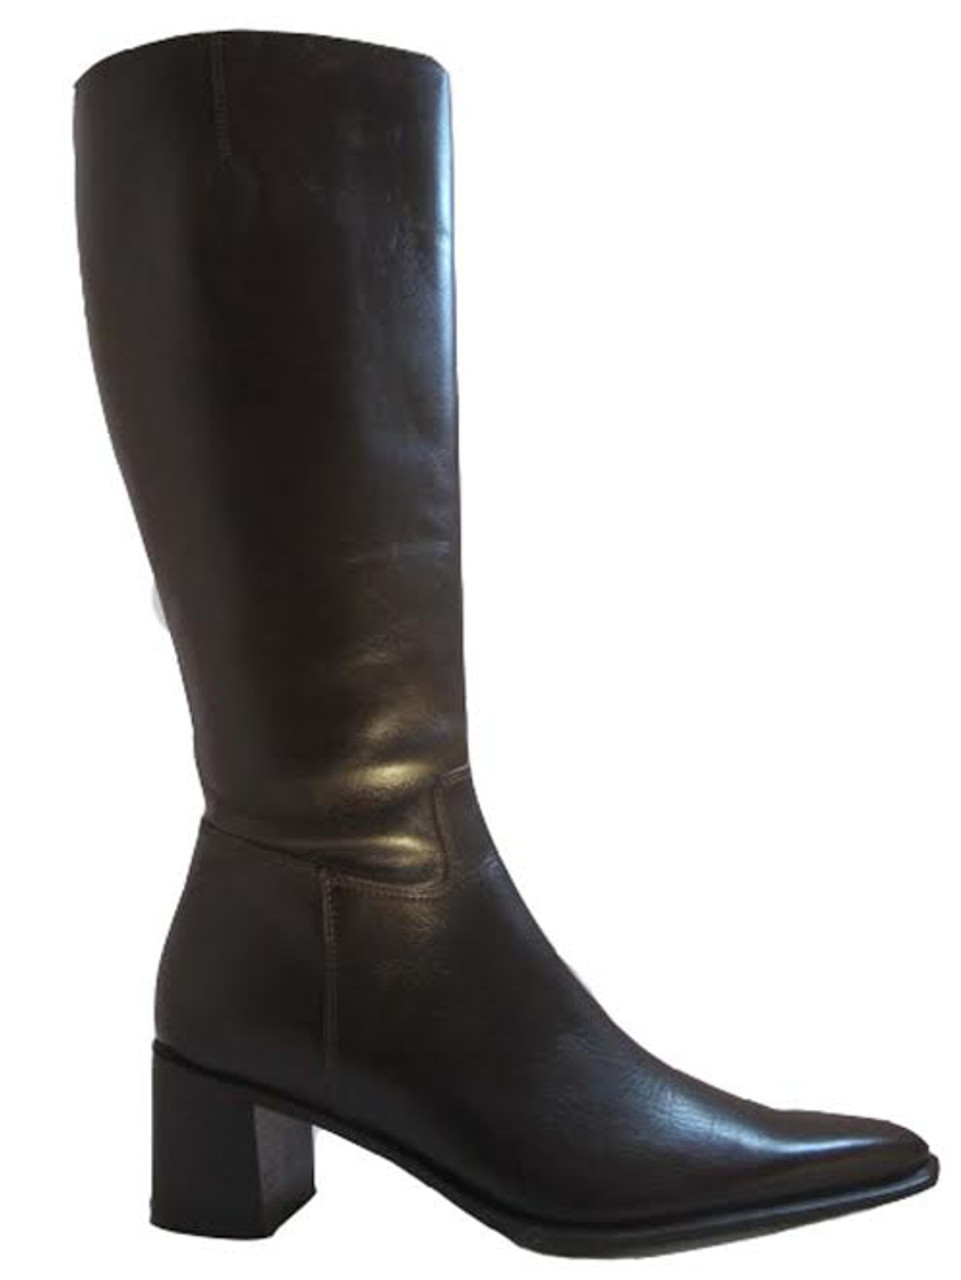 medium heel knee high boots